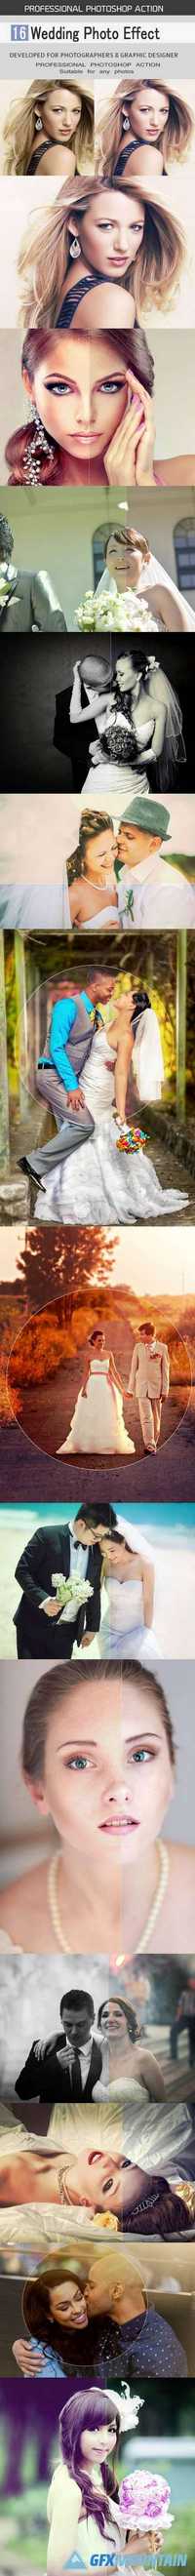 GraphicRiver - 16 Wedding Photo Effect 11245493